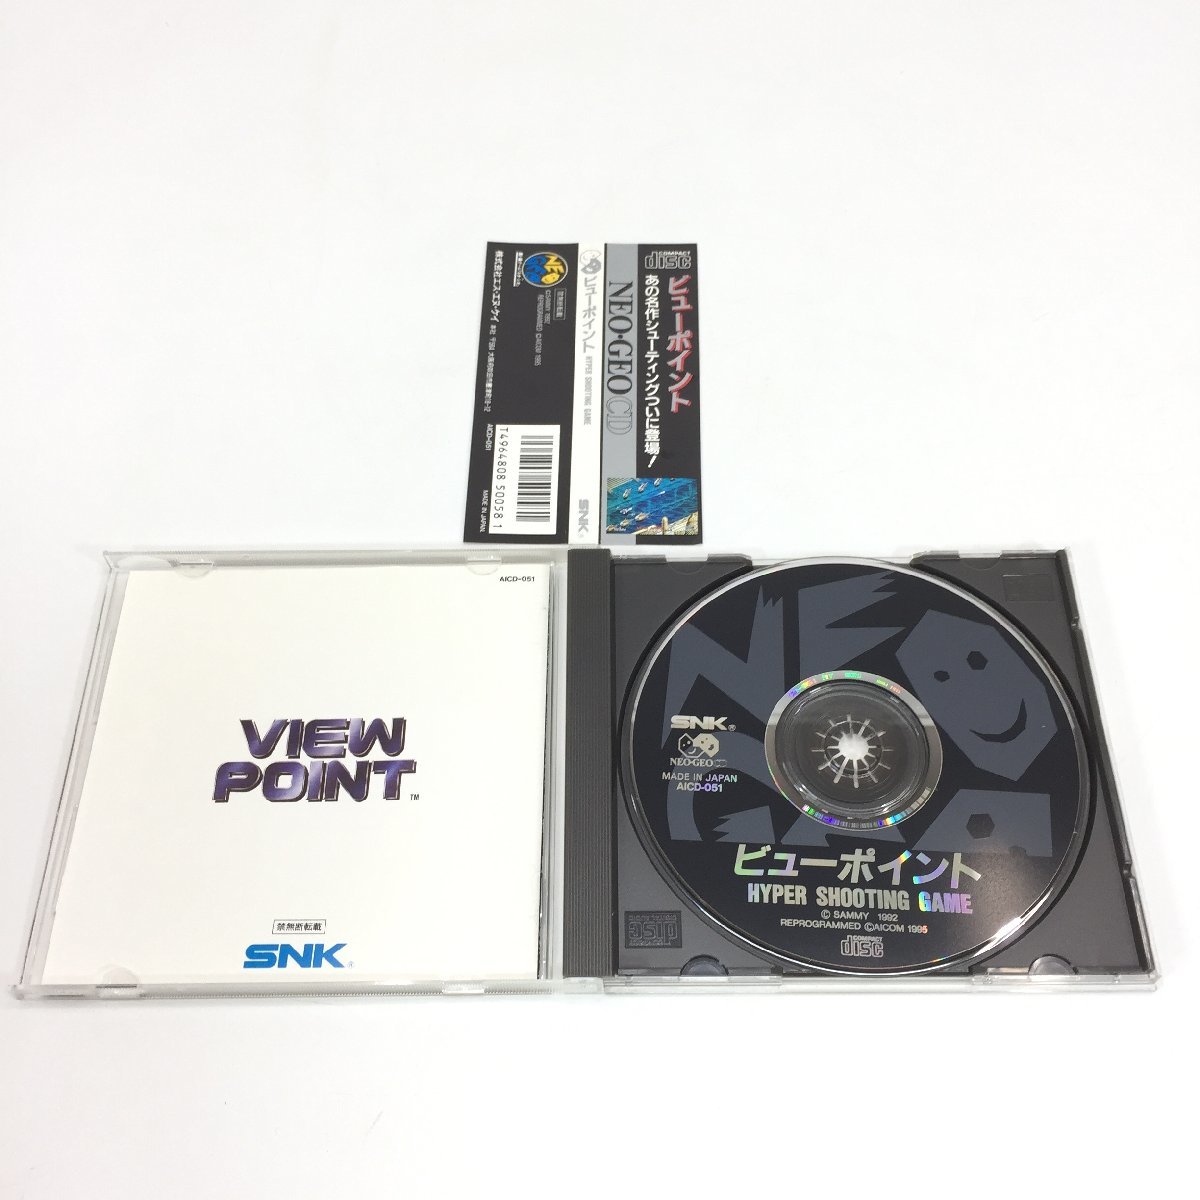 4987-60【 NEO GEO CD 】 NG ネオジオ CD ビューポイント VIEW POINT ネオジオ ソフト シューティングゲーム_画像3